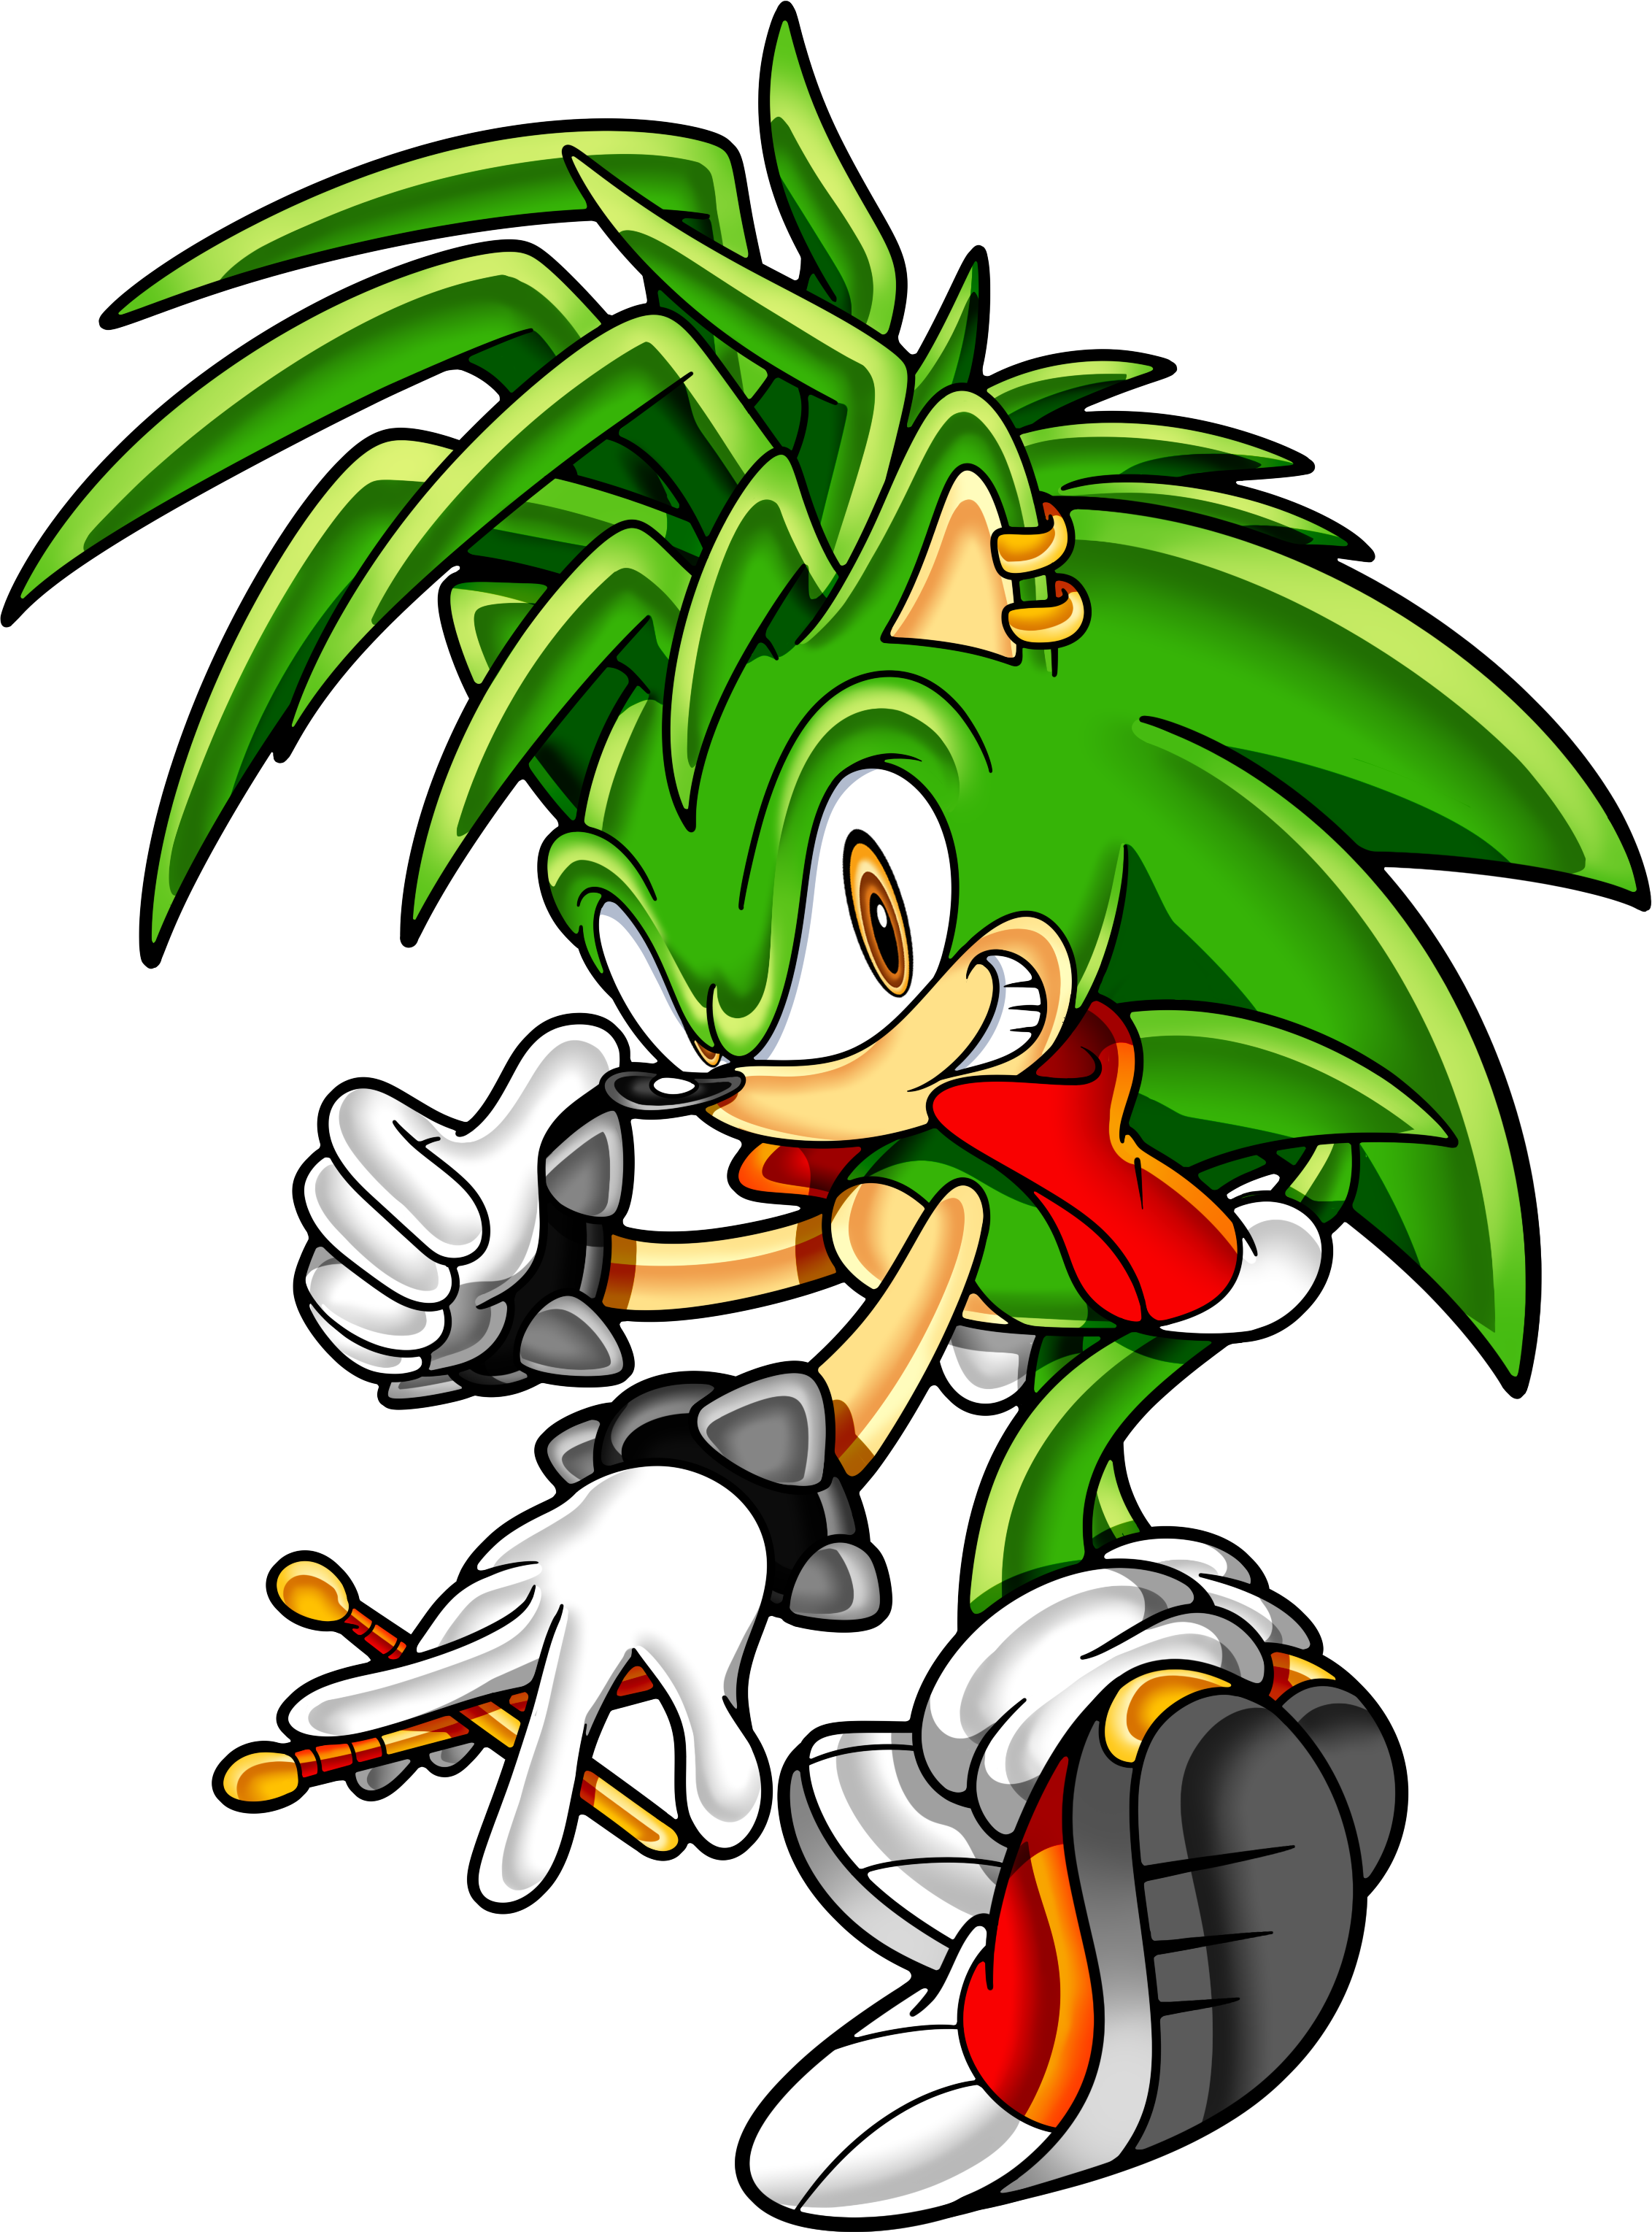 Sonic the Hedgehog Art by sonictheedgehog